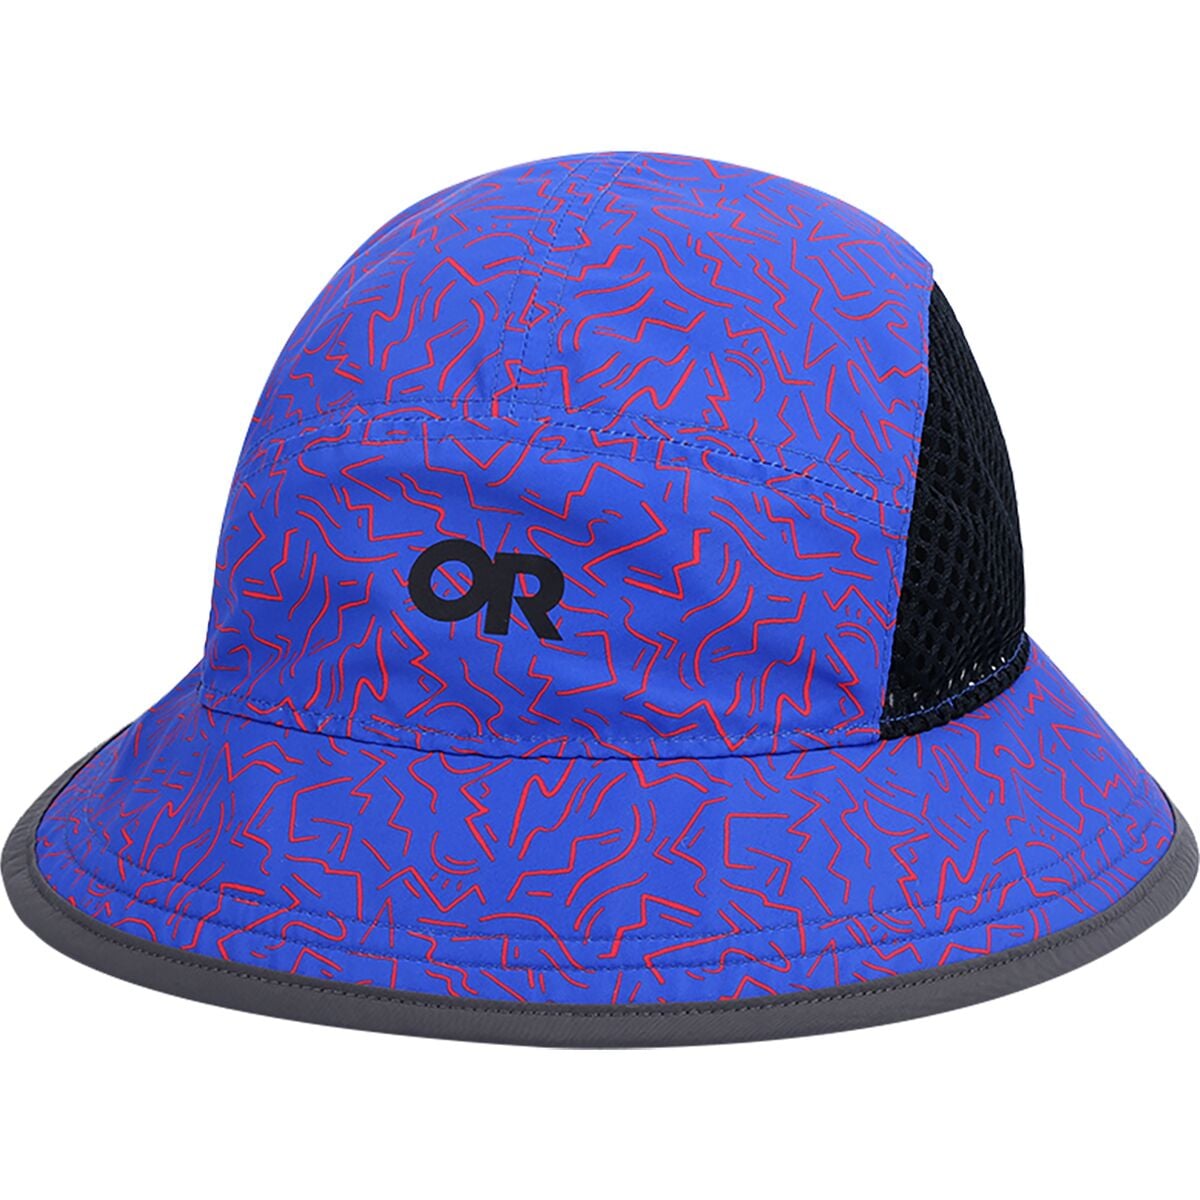 Outdoor Research Swift Bucket Hat Printed Ultramarine/Ultramarine Squiggle, S/M